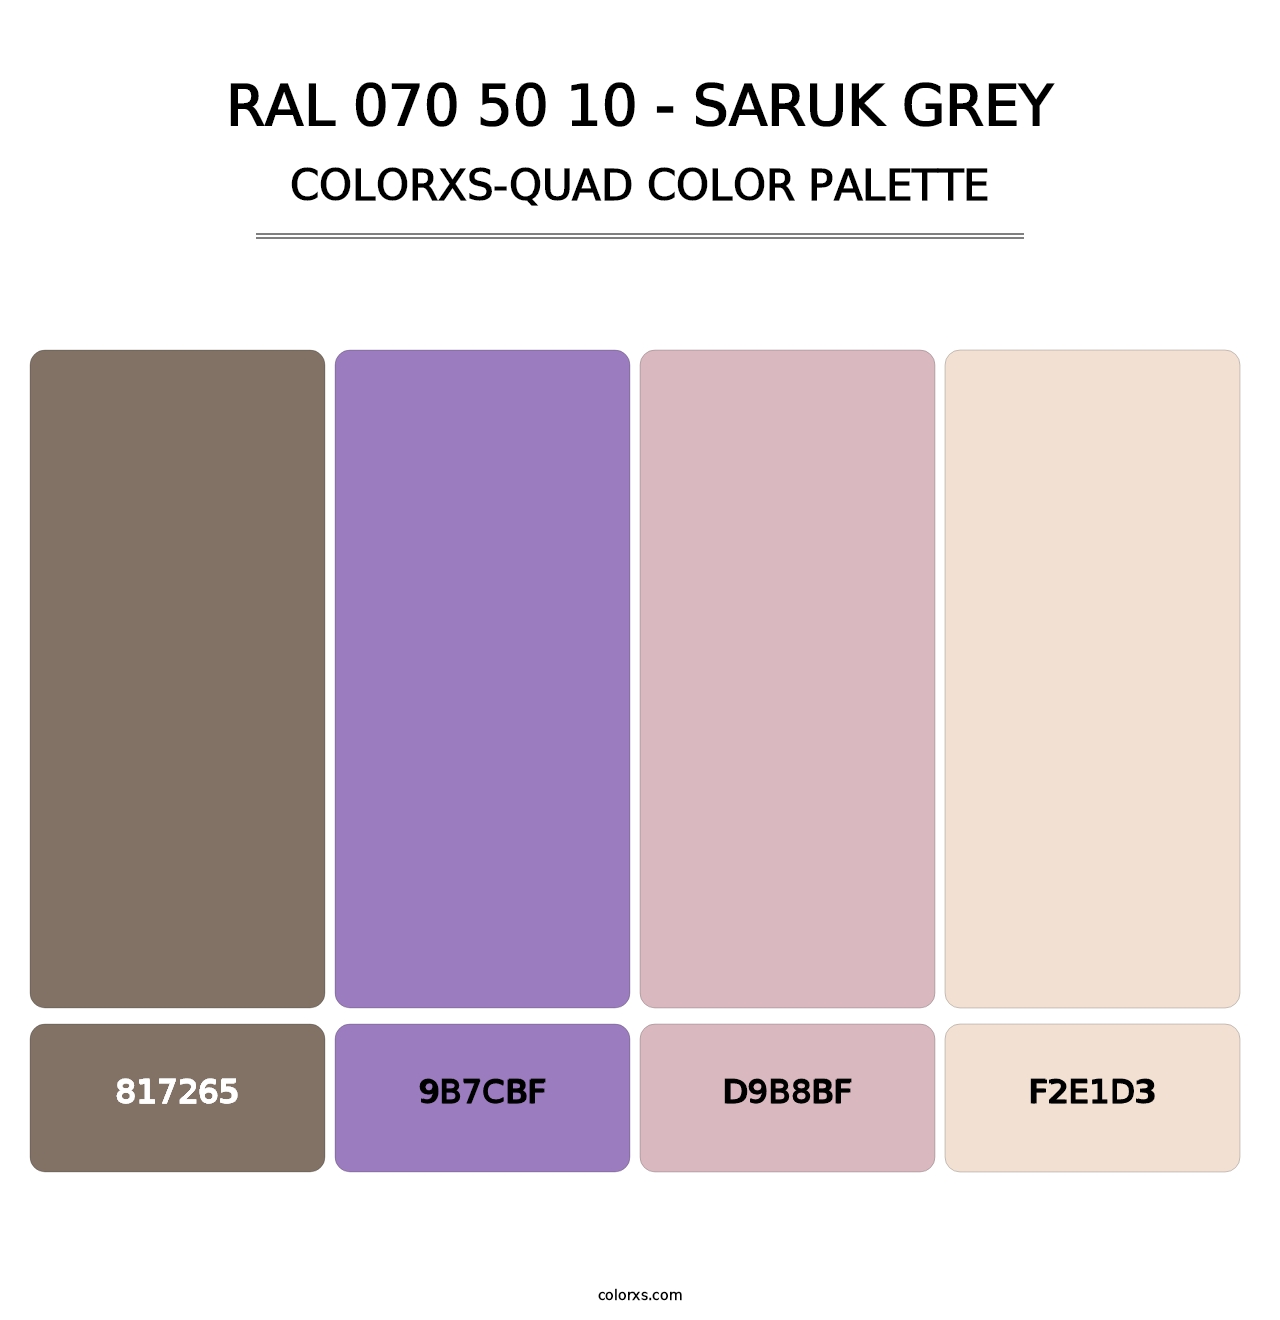 RAL 070 50 10 - Saruk Grey - Colorxs Quad Palette